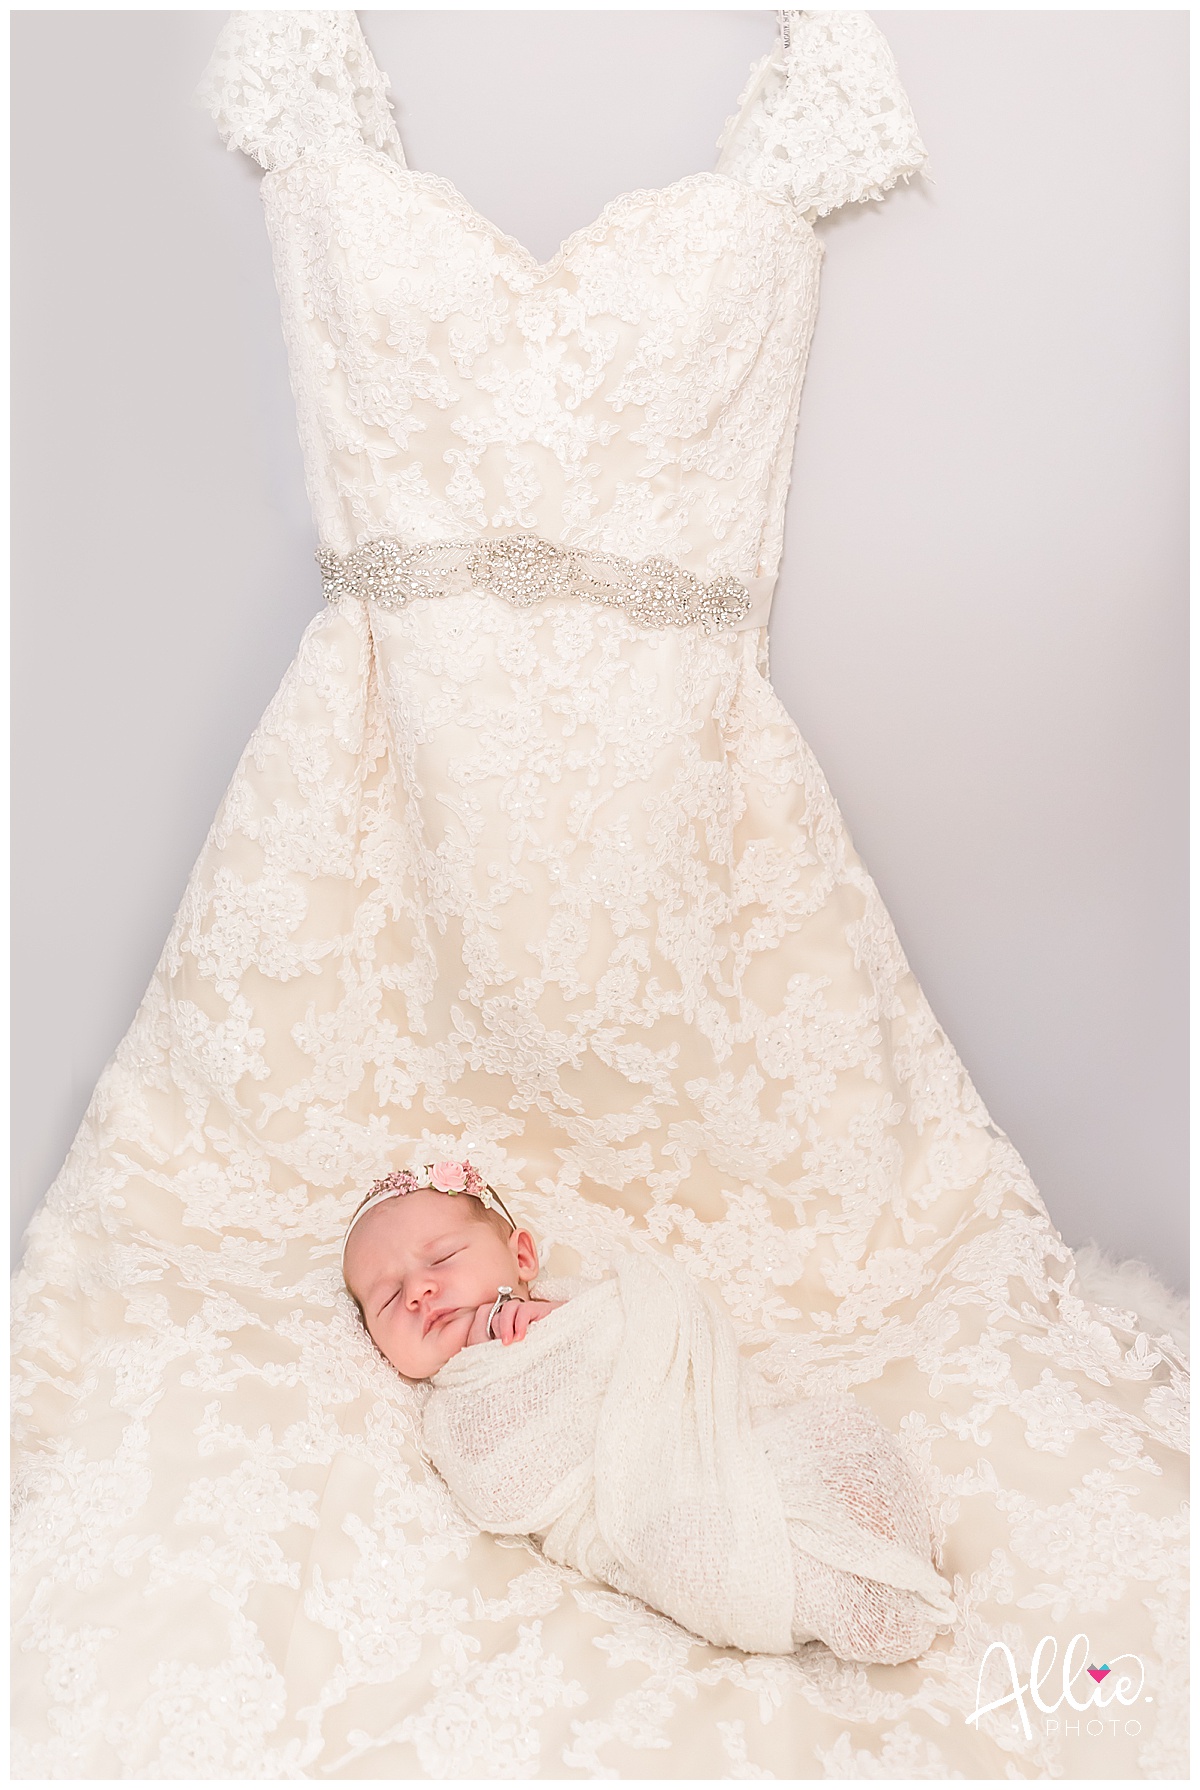 newborn photos at home with wedding dress